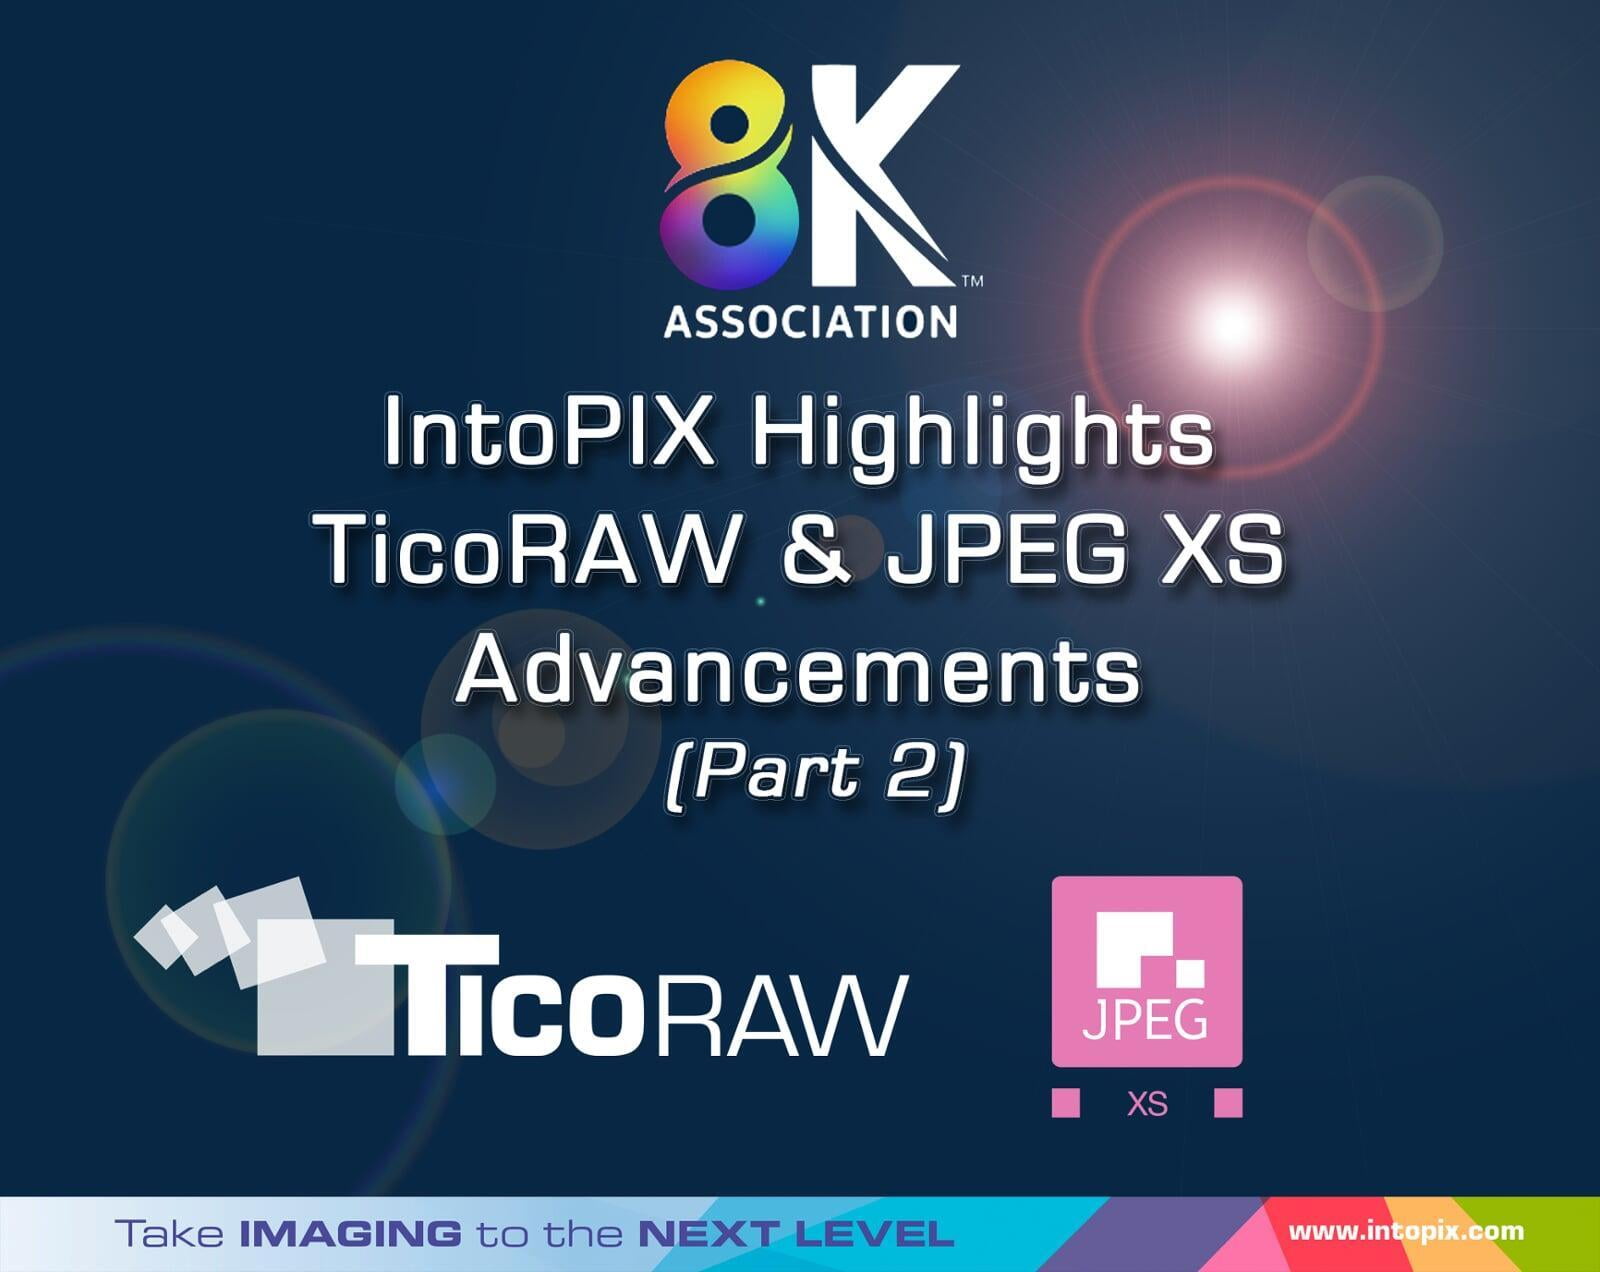 8K Association: IntoPIX Highlights TicoRAW and JPEG XS Advancements (Part 2)